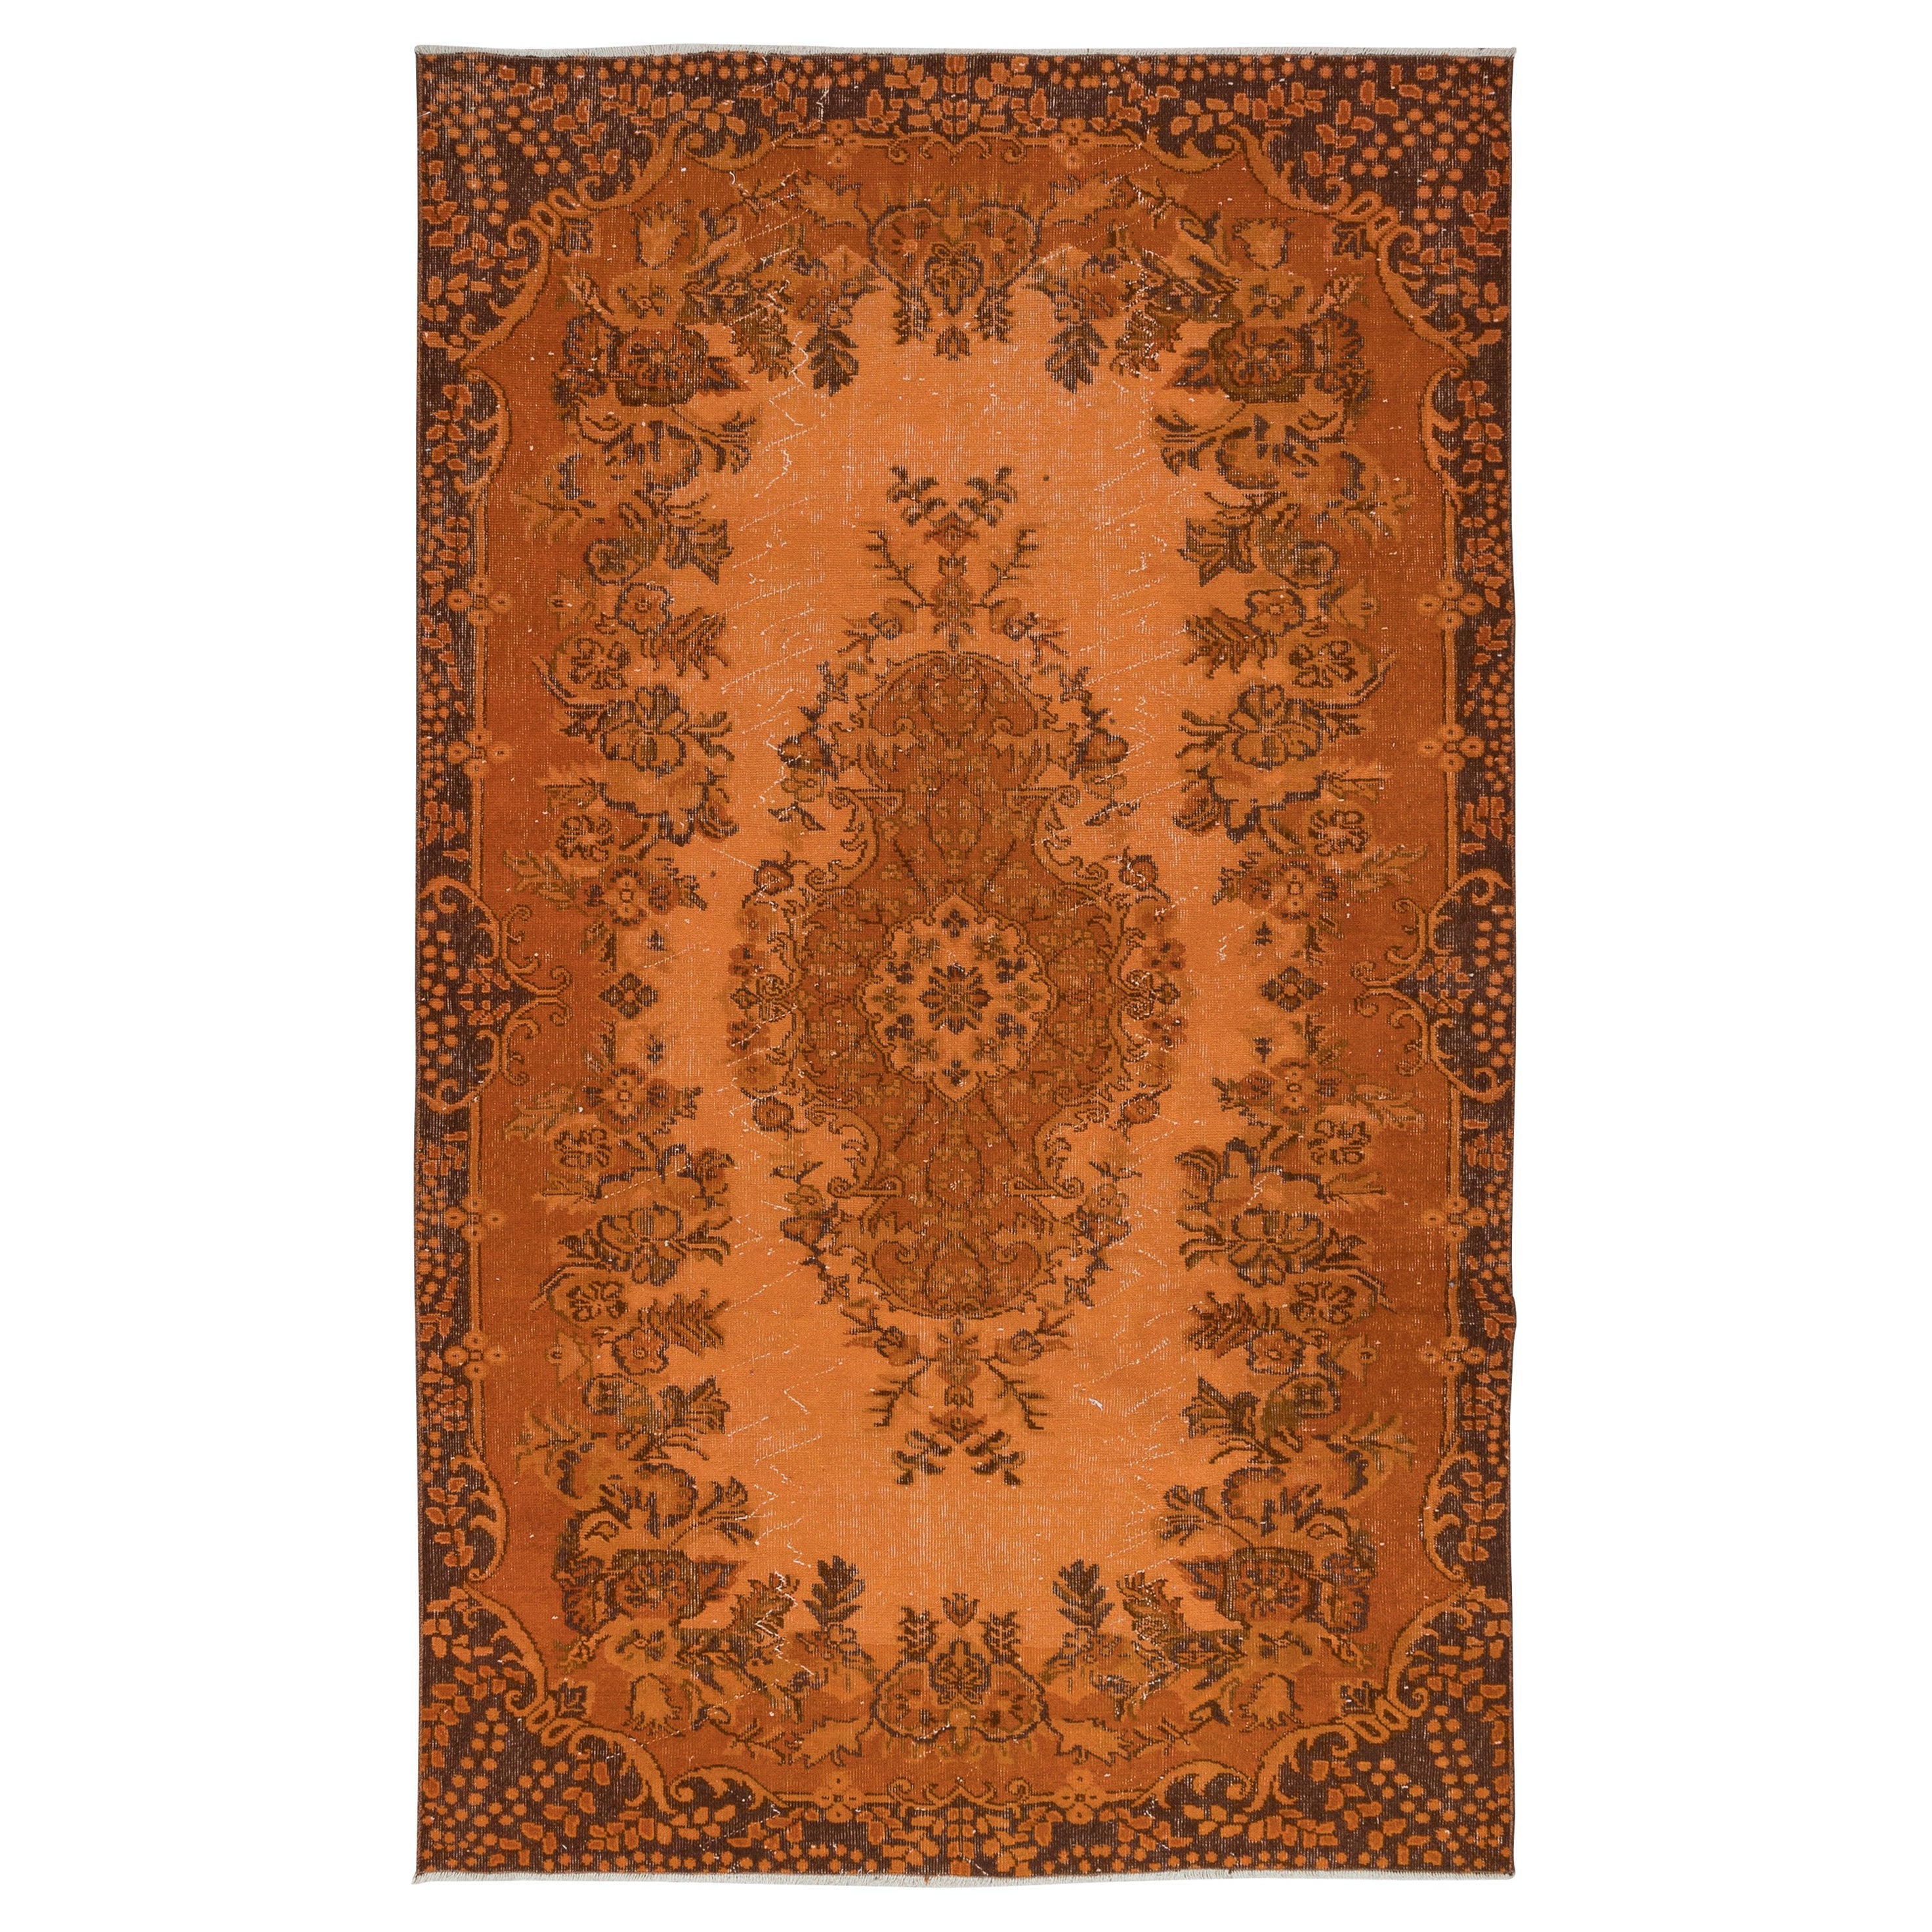 5.6x9.2 Ft Handmade Turkish Orange Rug, Modern Medallion Design Carpet For Sale